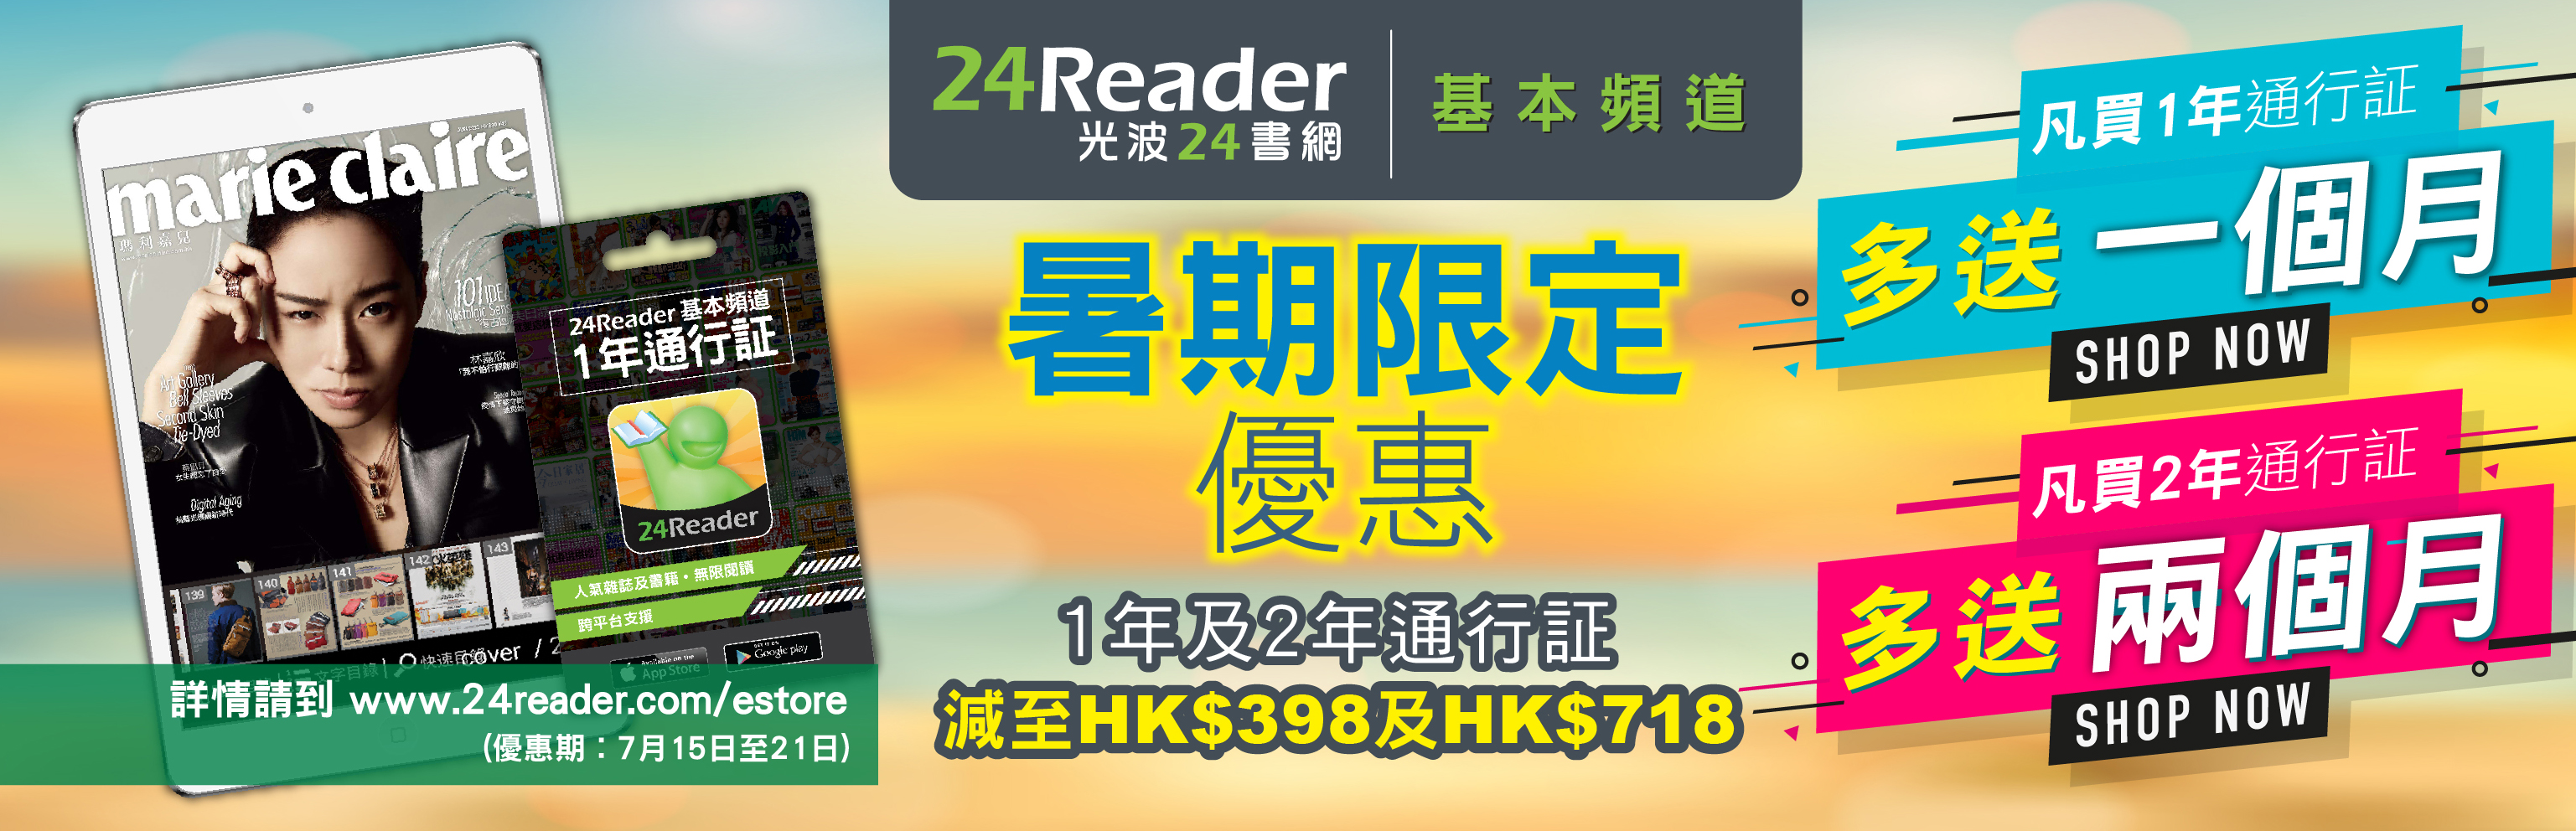 24Reader 基本頻道 暑期限定優惠